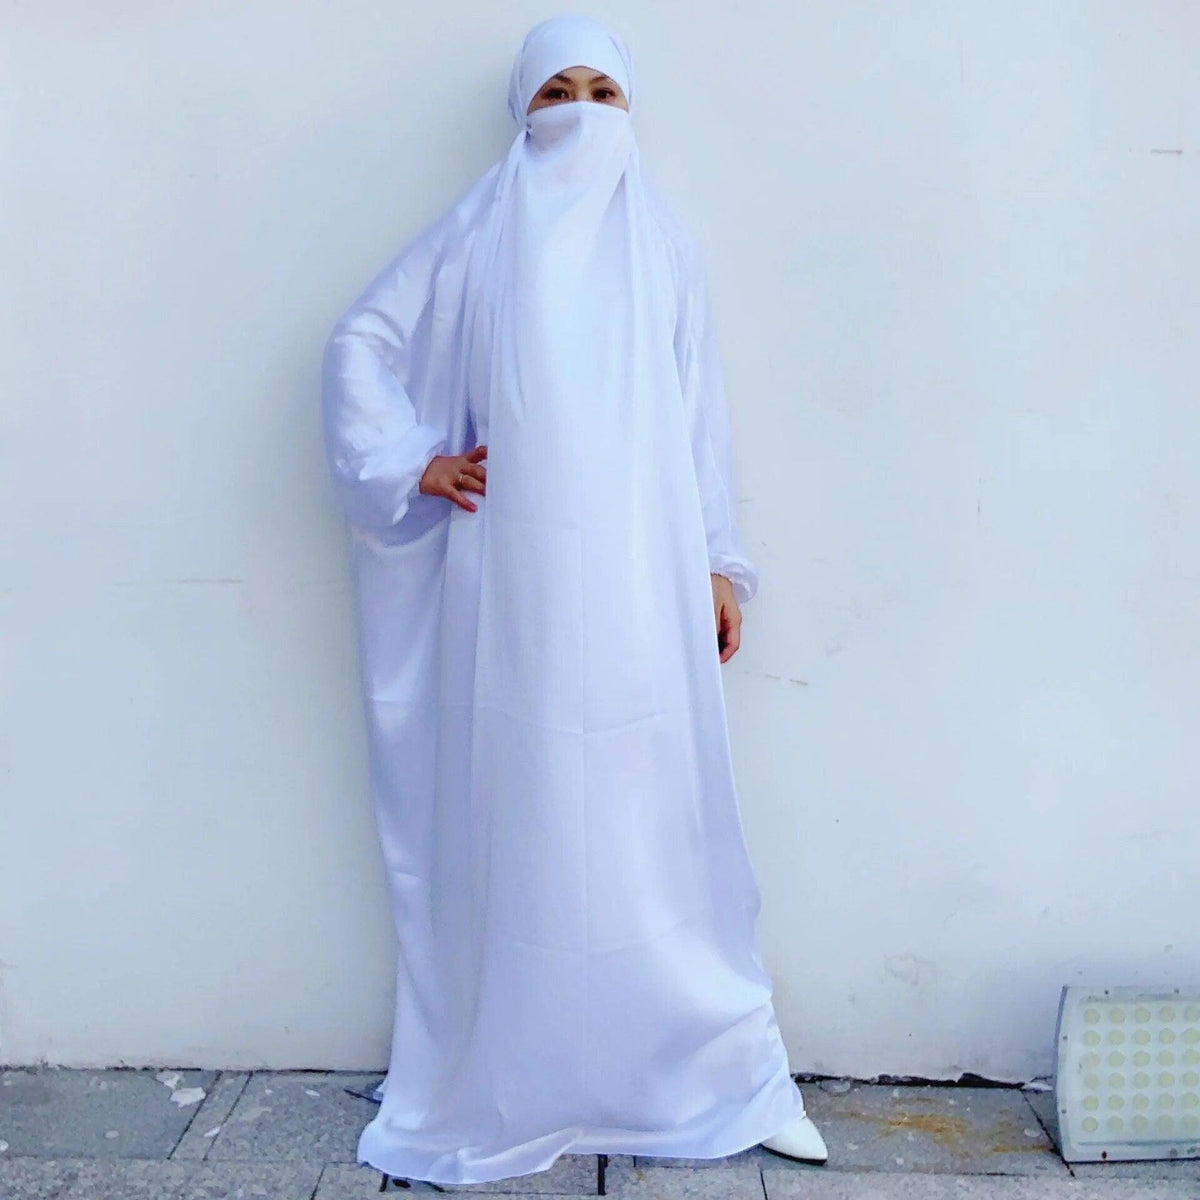 On sale - Muslim Prayer Garment Jilbab - 14 Colours - Free